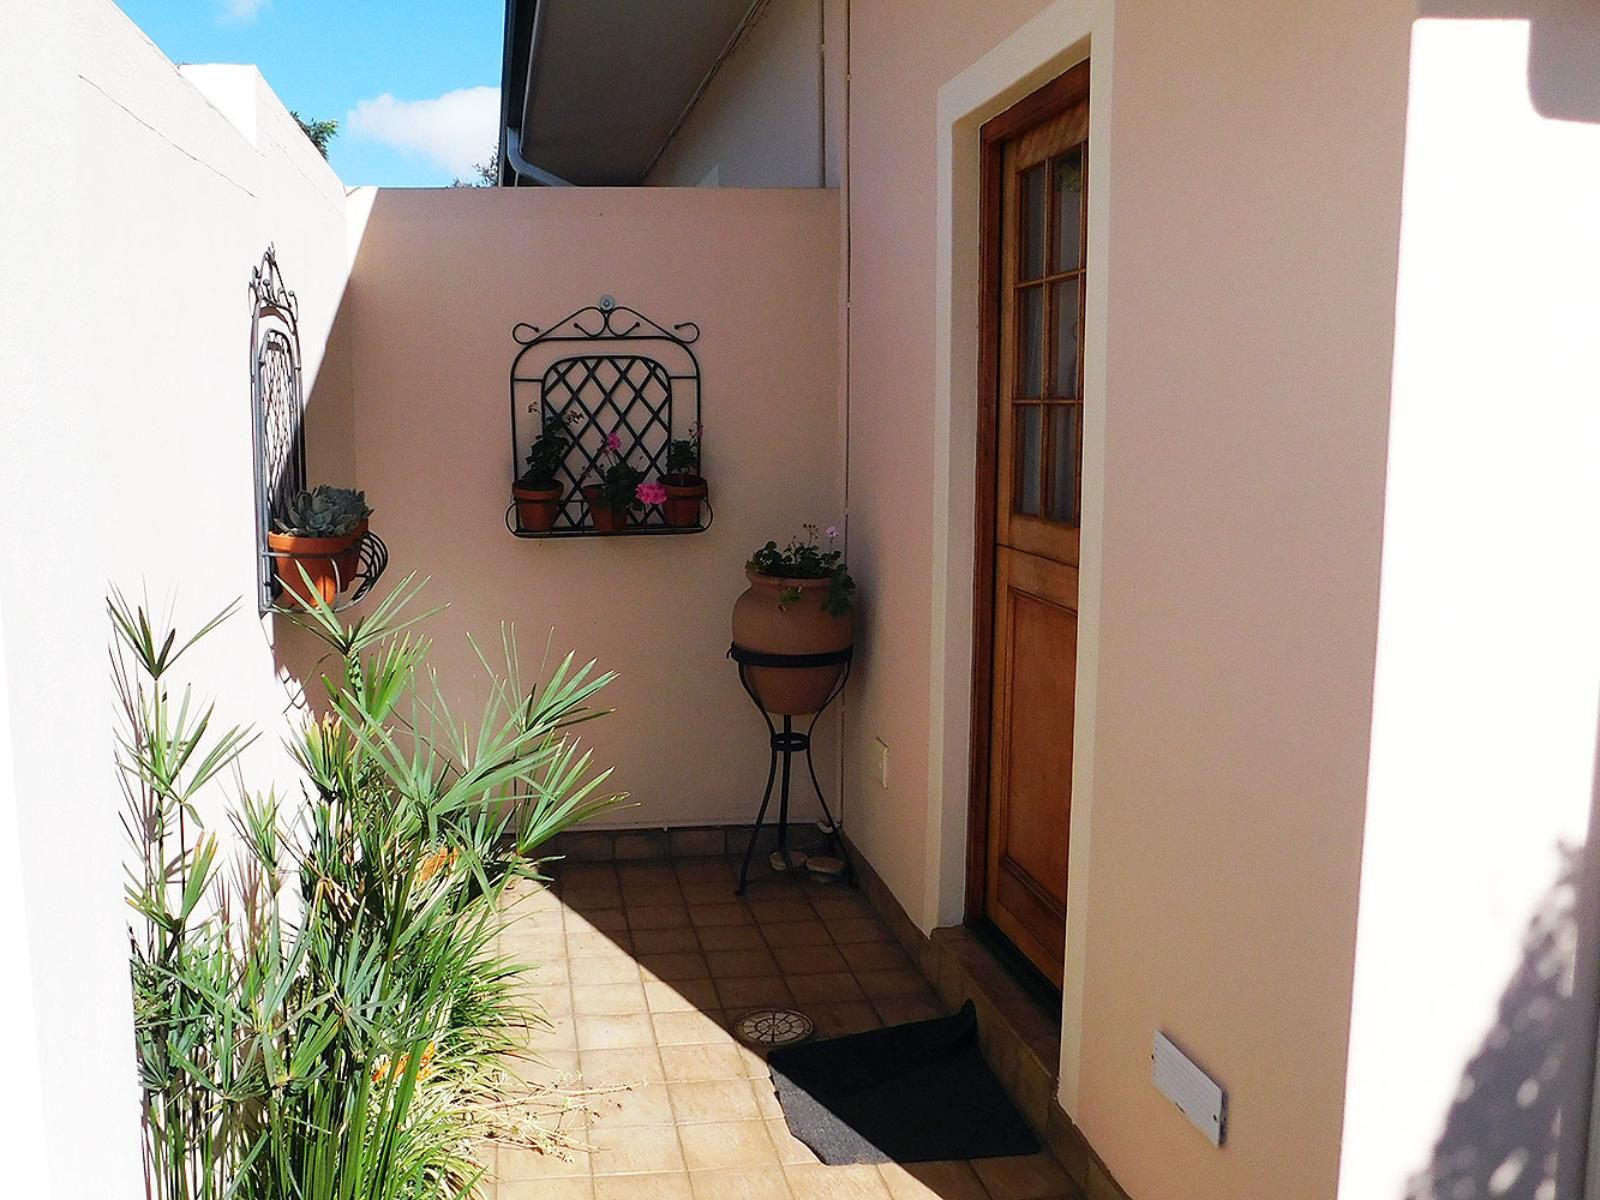 Dankhof Guest House Lydenburg Mpumalanga South Africa Door, Architecture, Garden, Nature, Plant